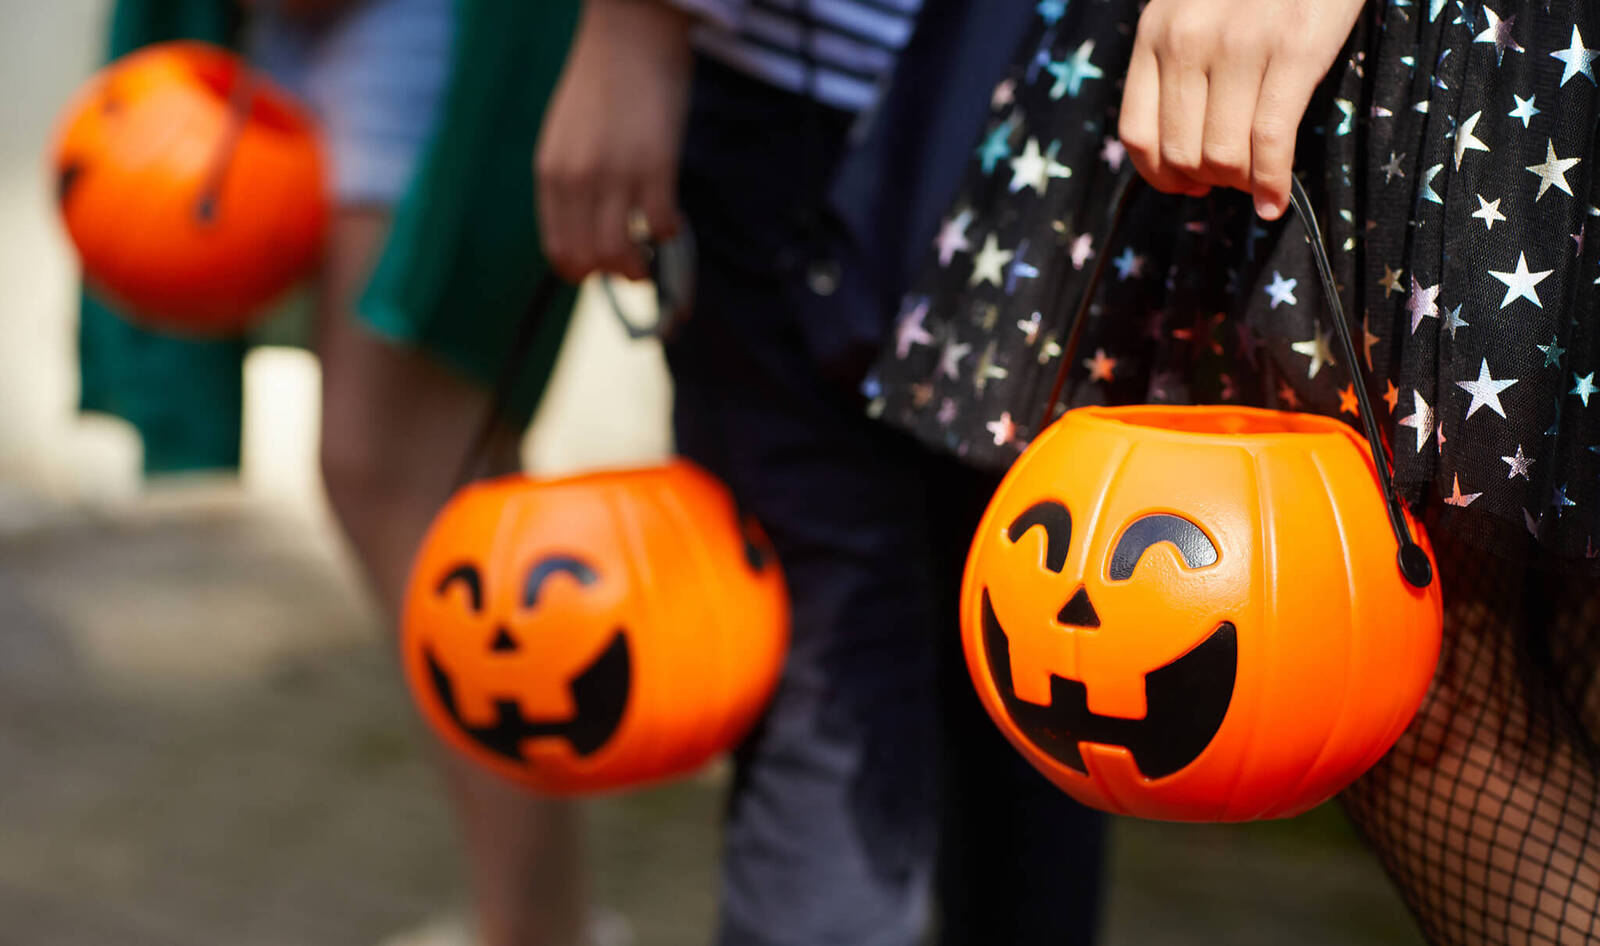 14 Healthier Vegan Halloween Treats That Are Ghoulishly Good<br>